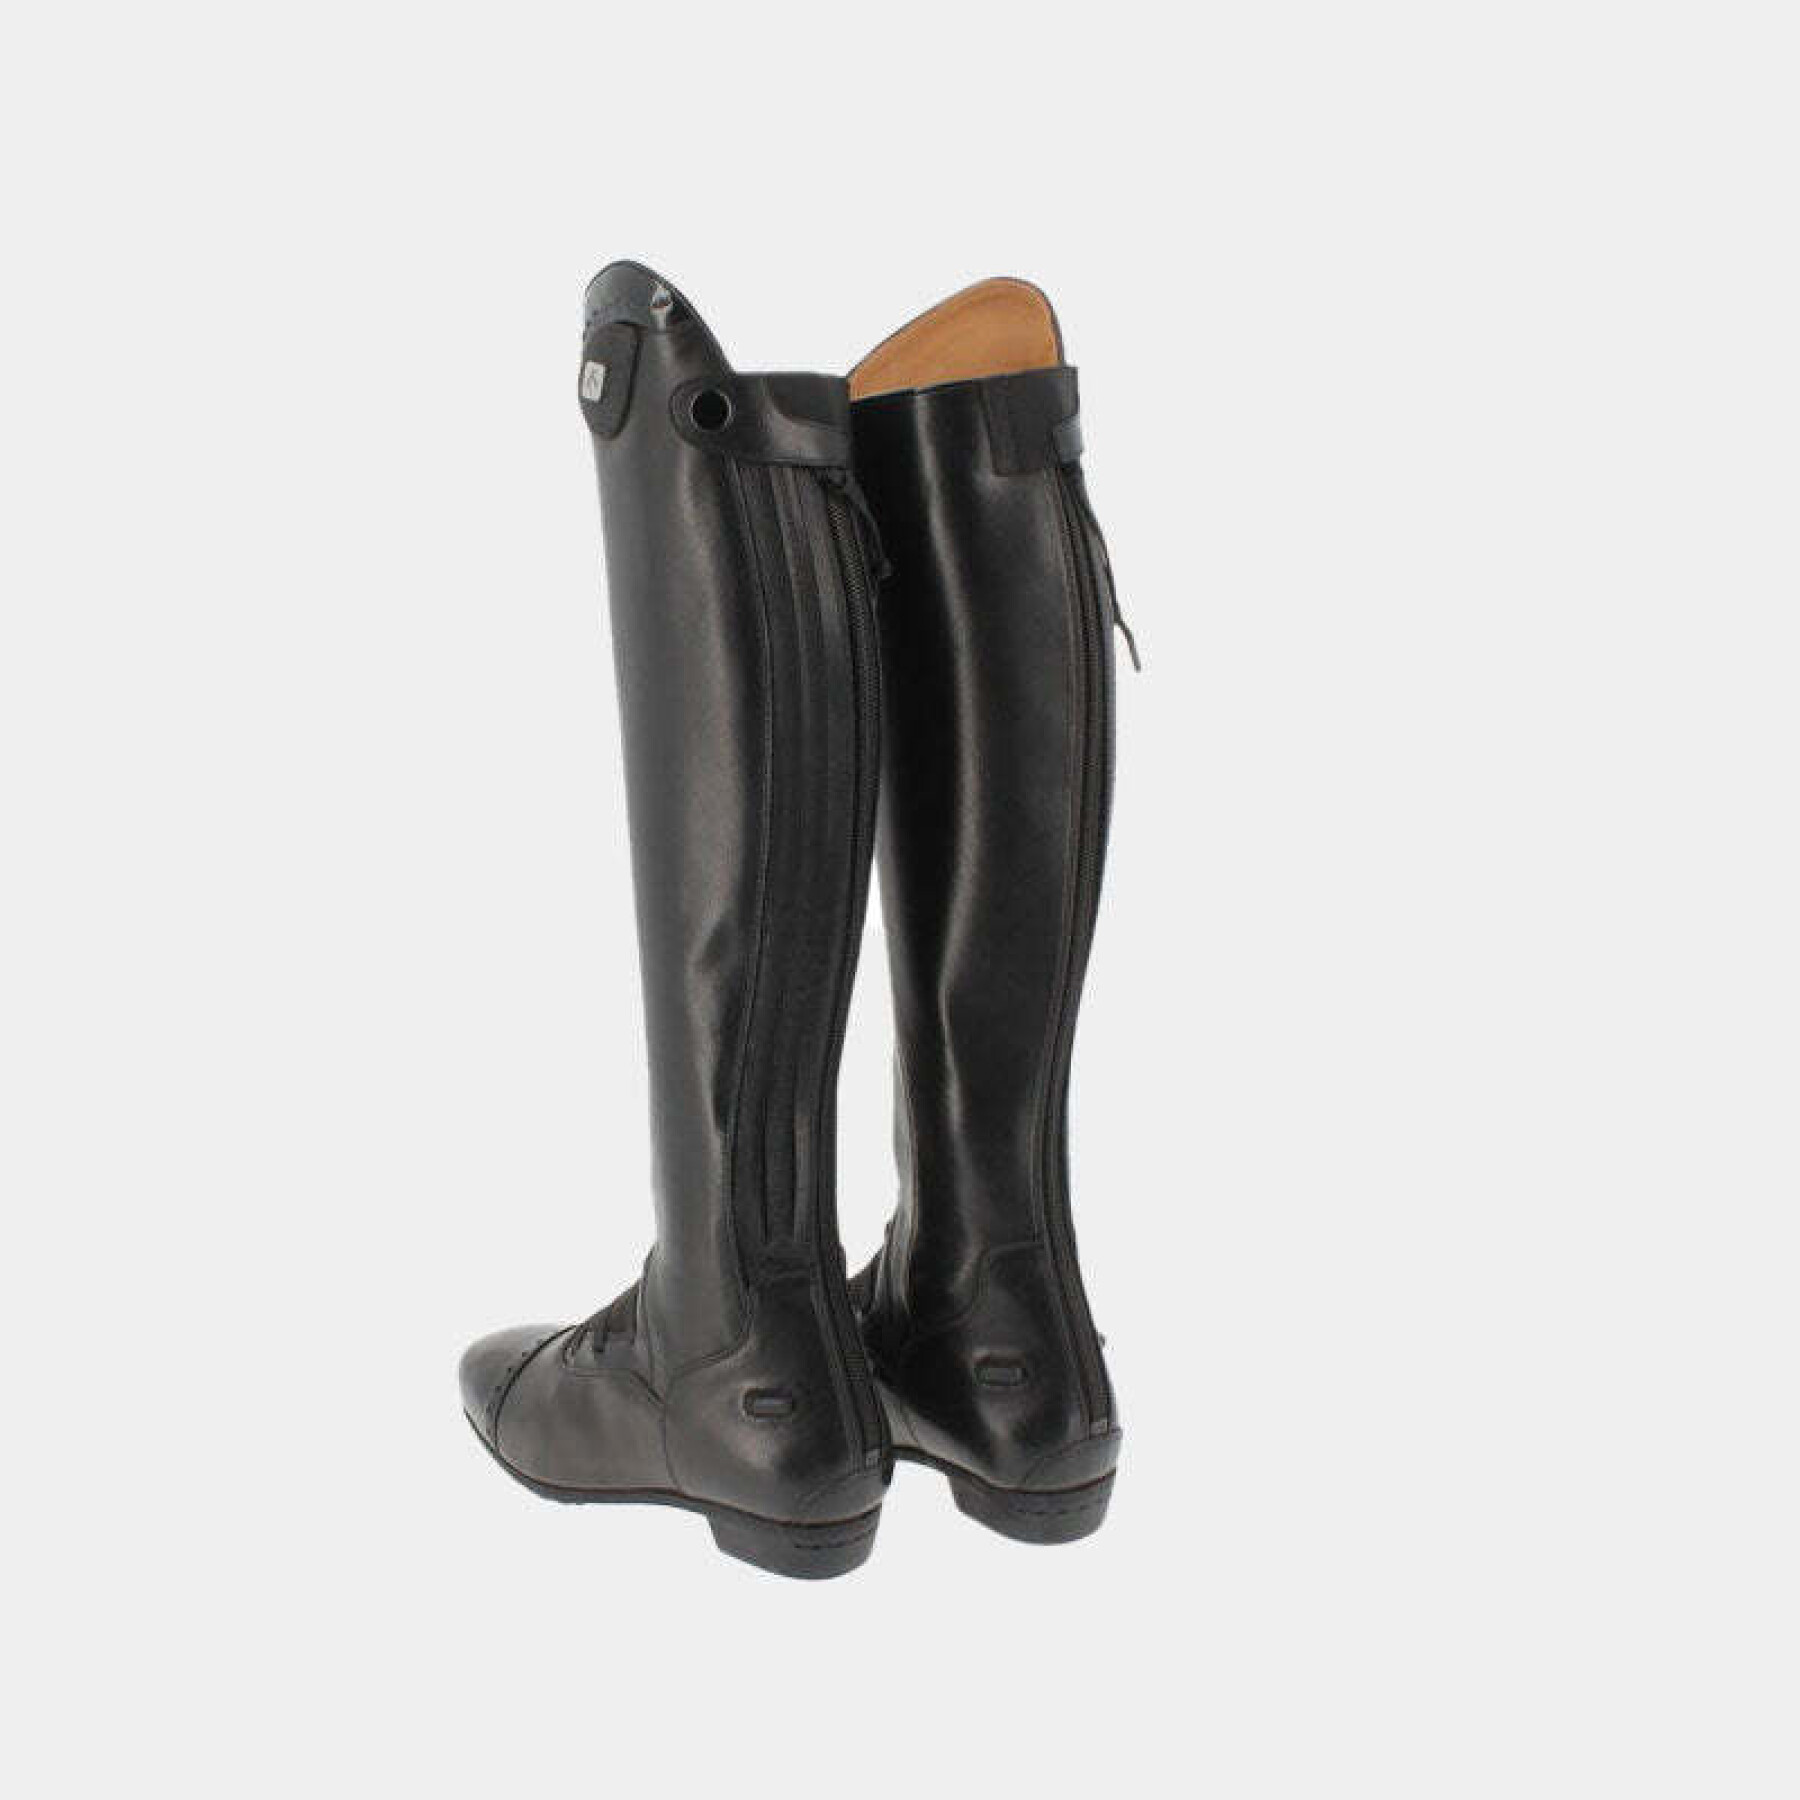 Standard riding boots with calf: women's slim fit Pénélope Eclipse